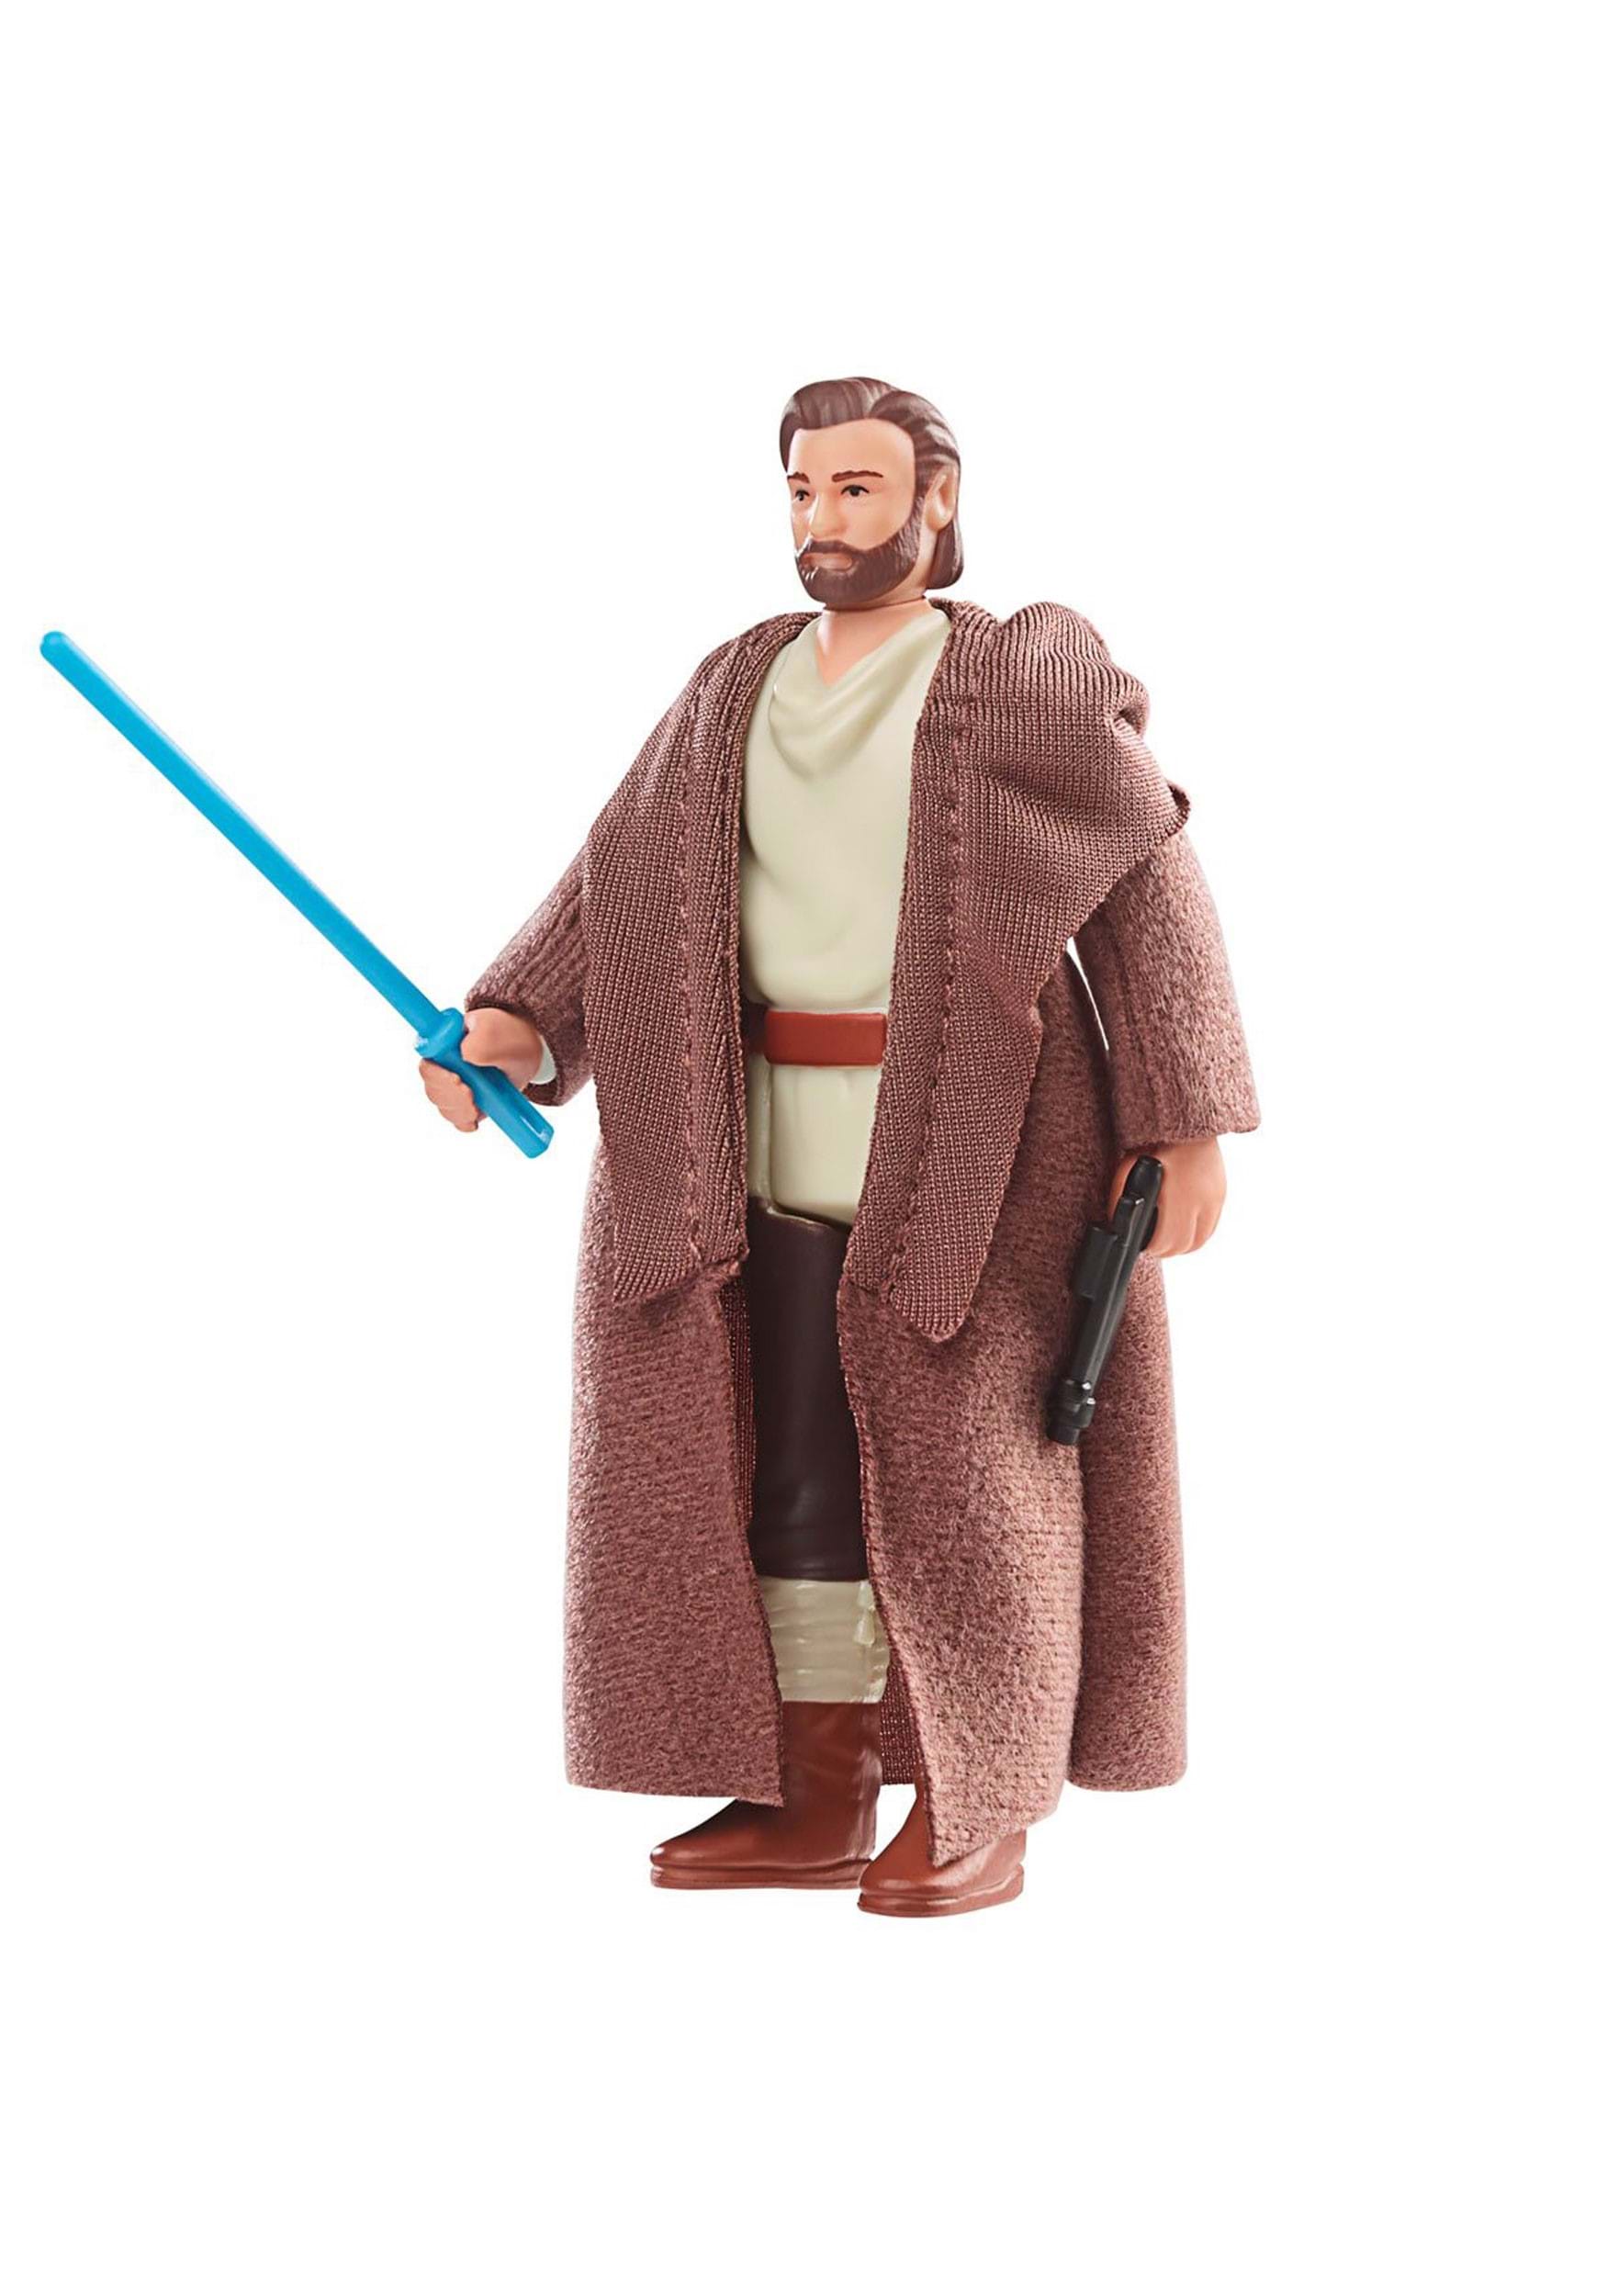 Star Wars The Retro Collection Obi-Wan Kenobi (Wandering Jedi) Figurine